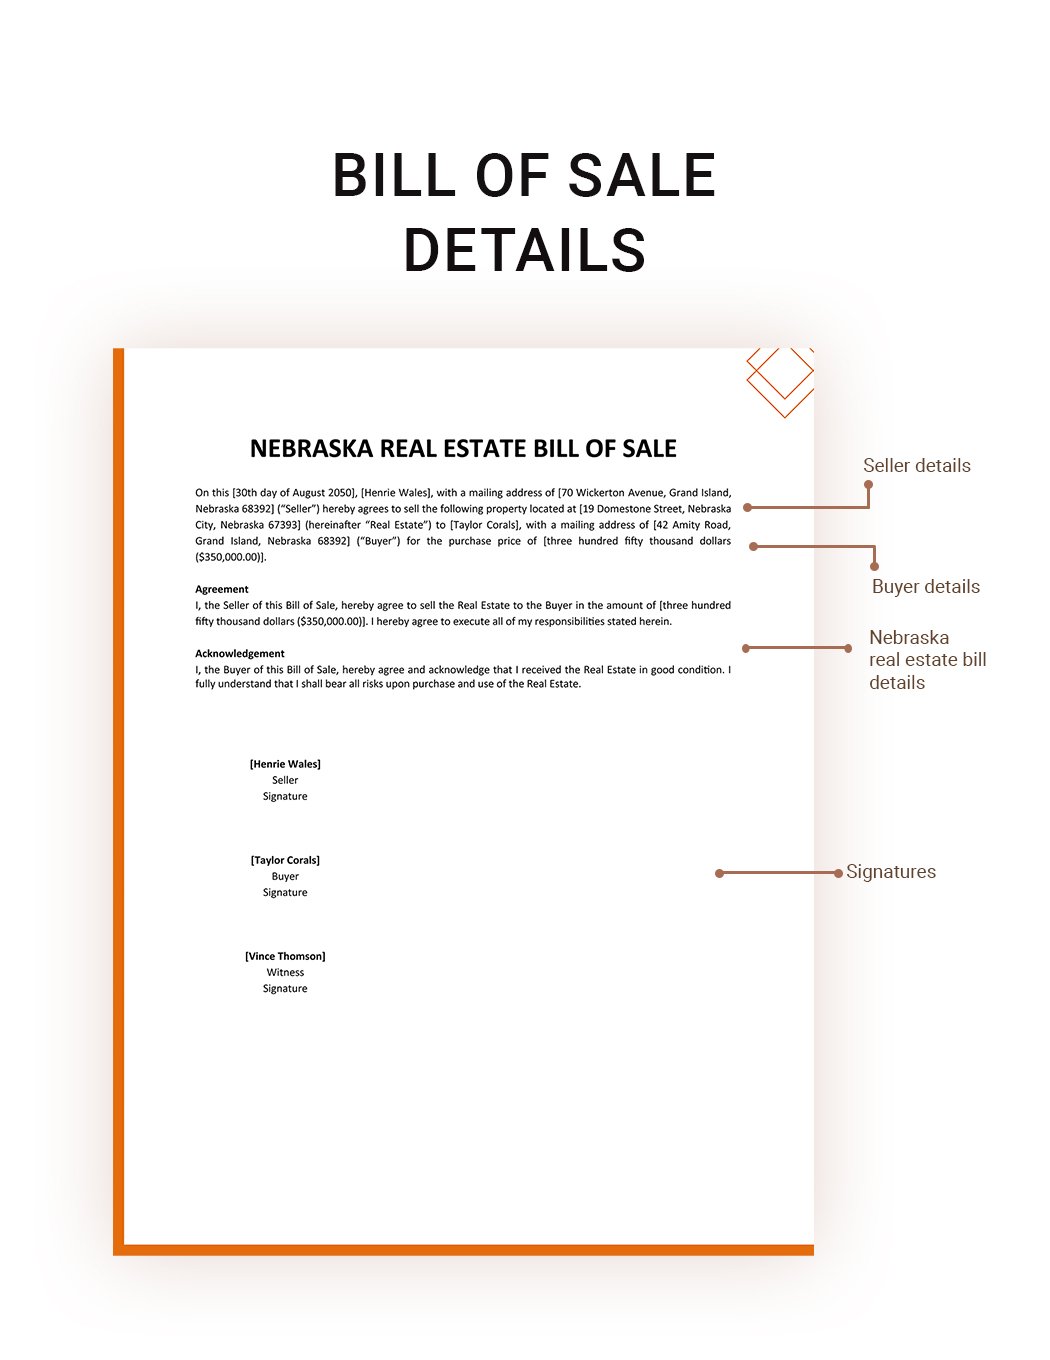 Nebraska Real Estate Bill of Sale Template